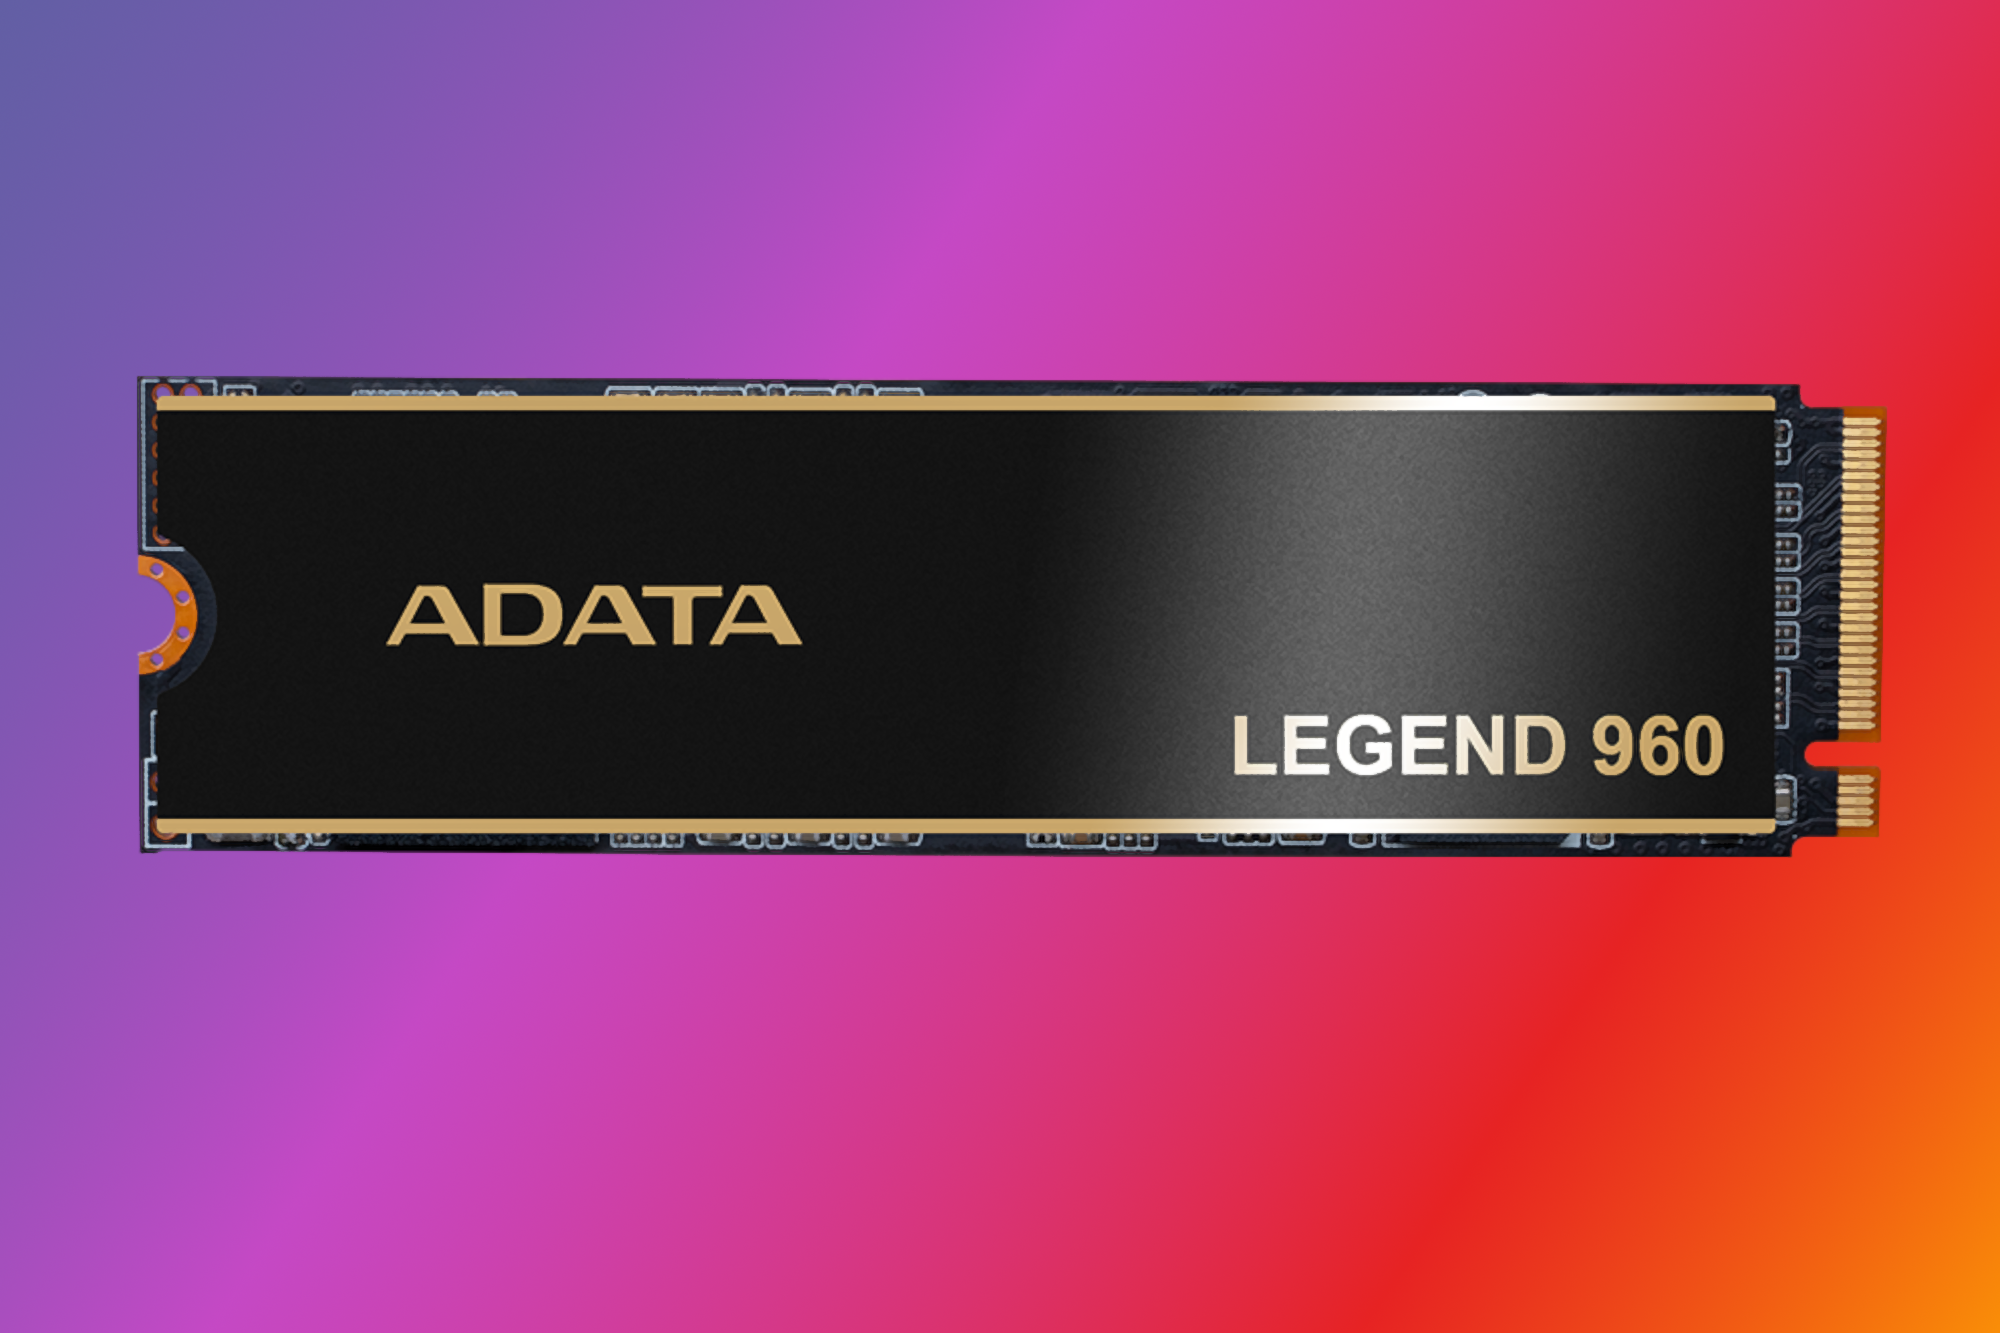 Adata Legend 960 NVMe SSD